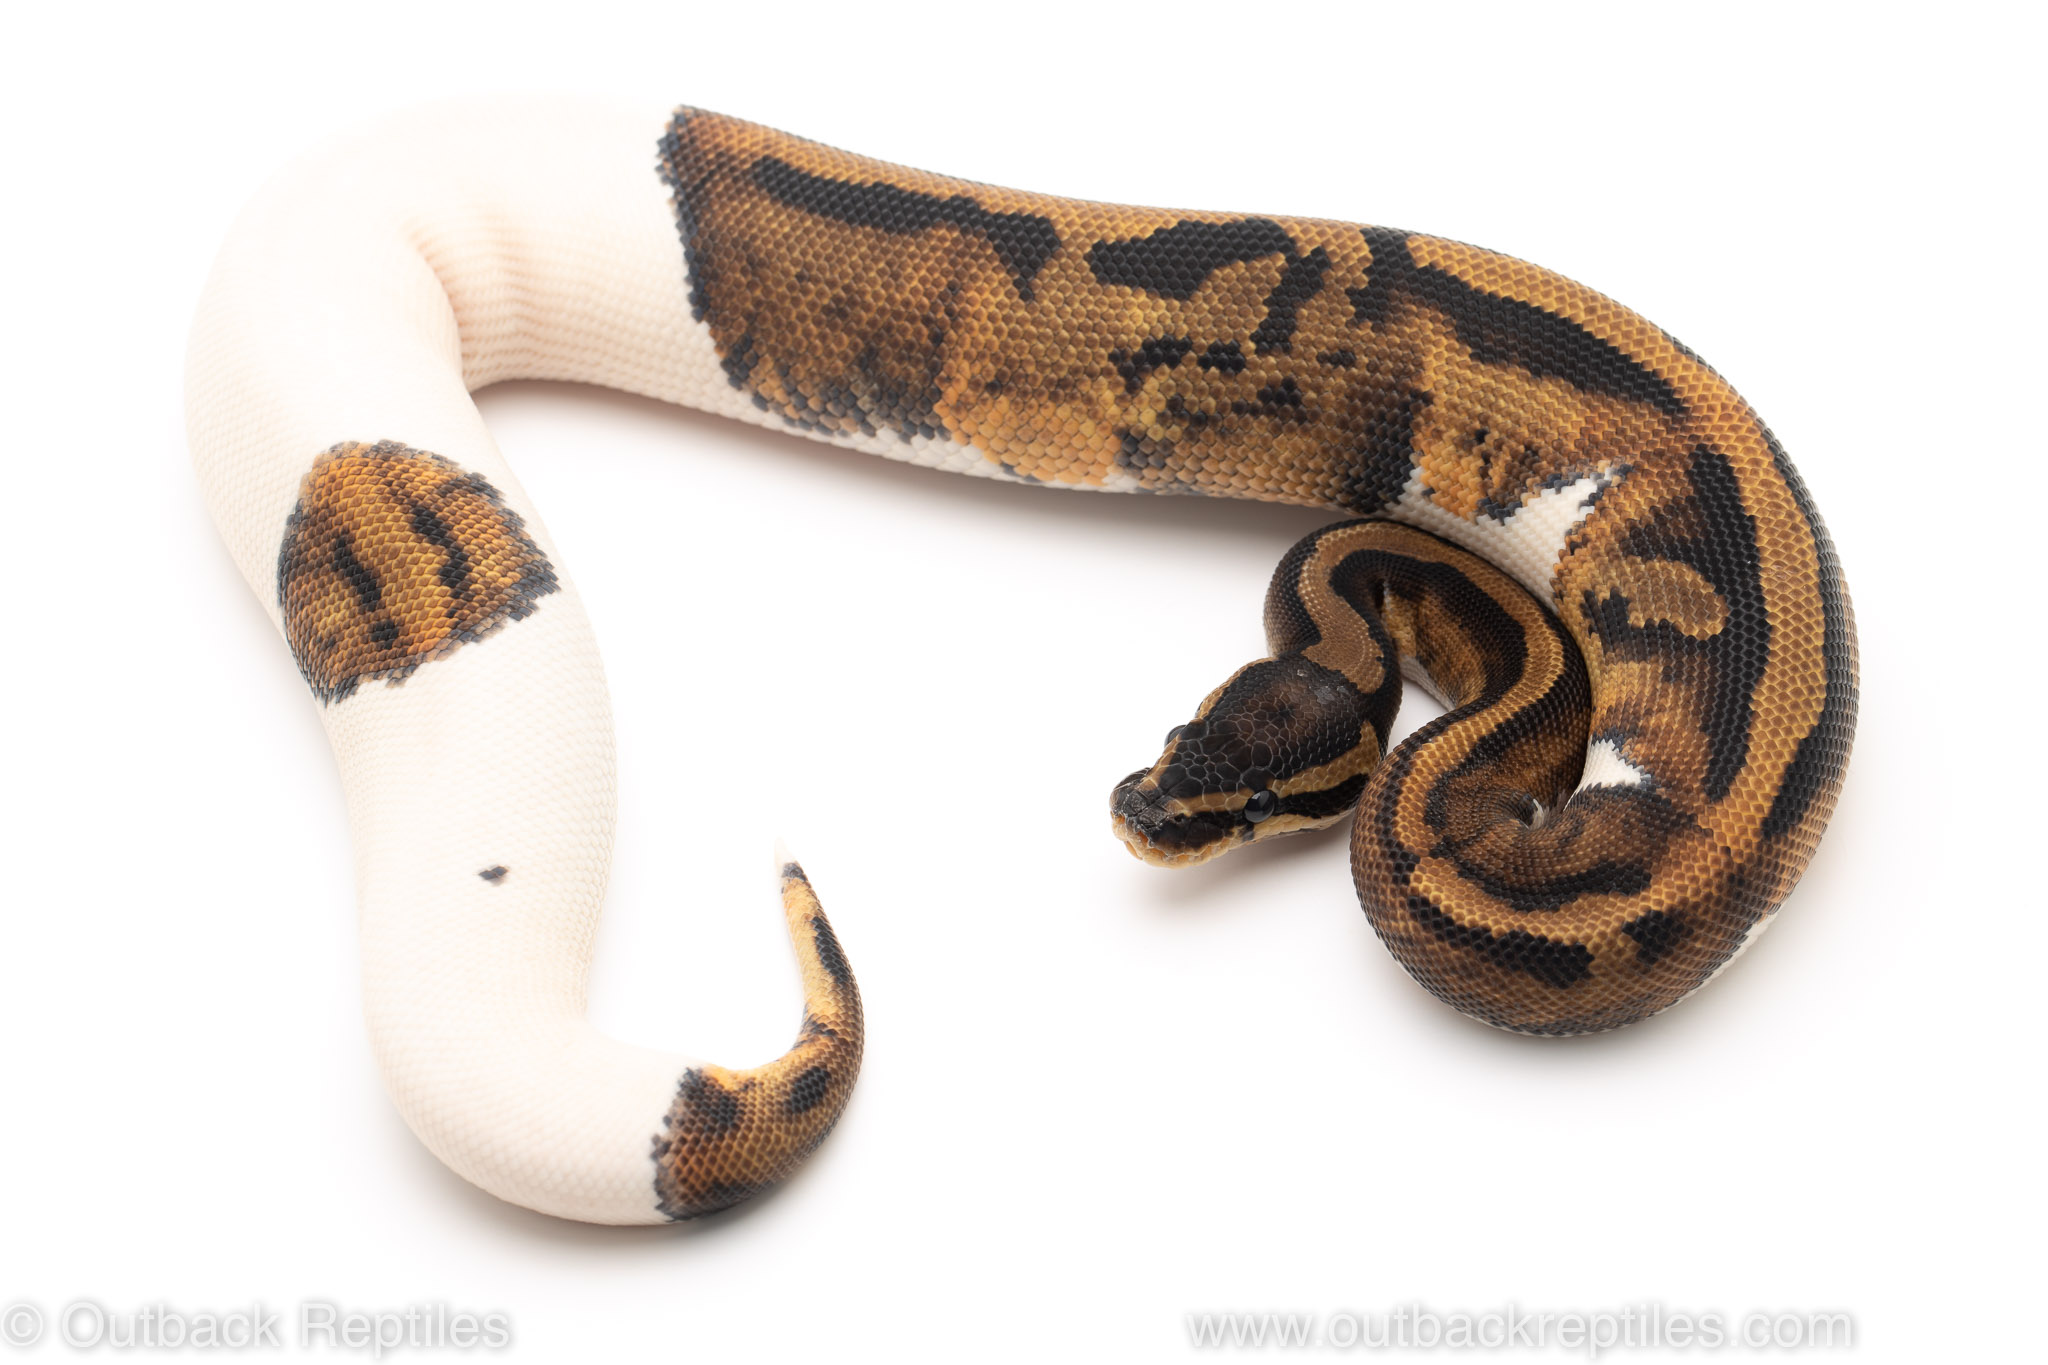 pied ball python for sale